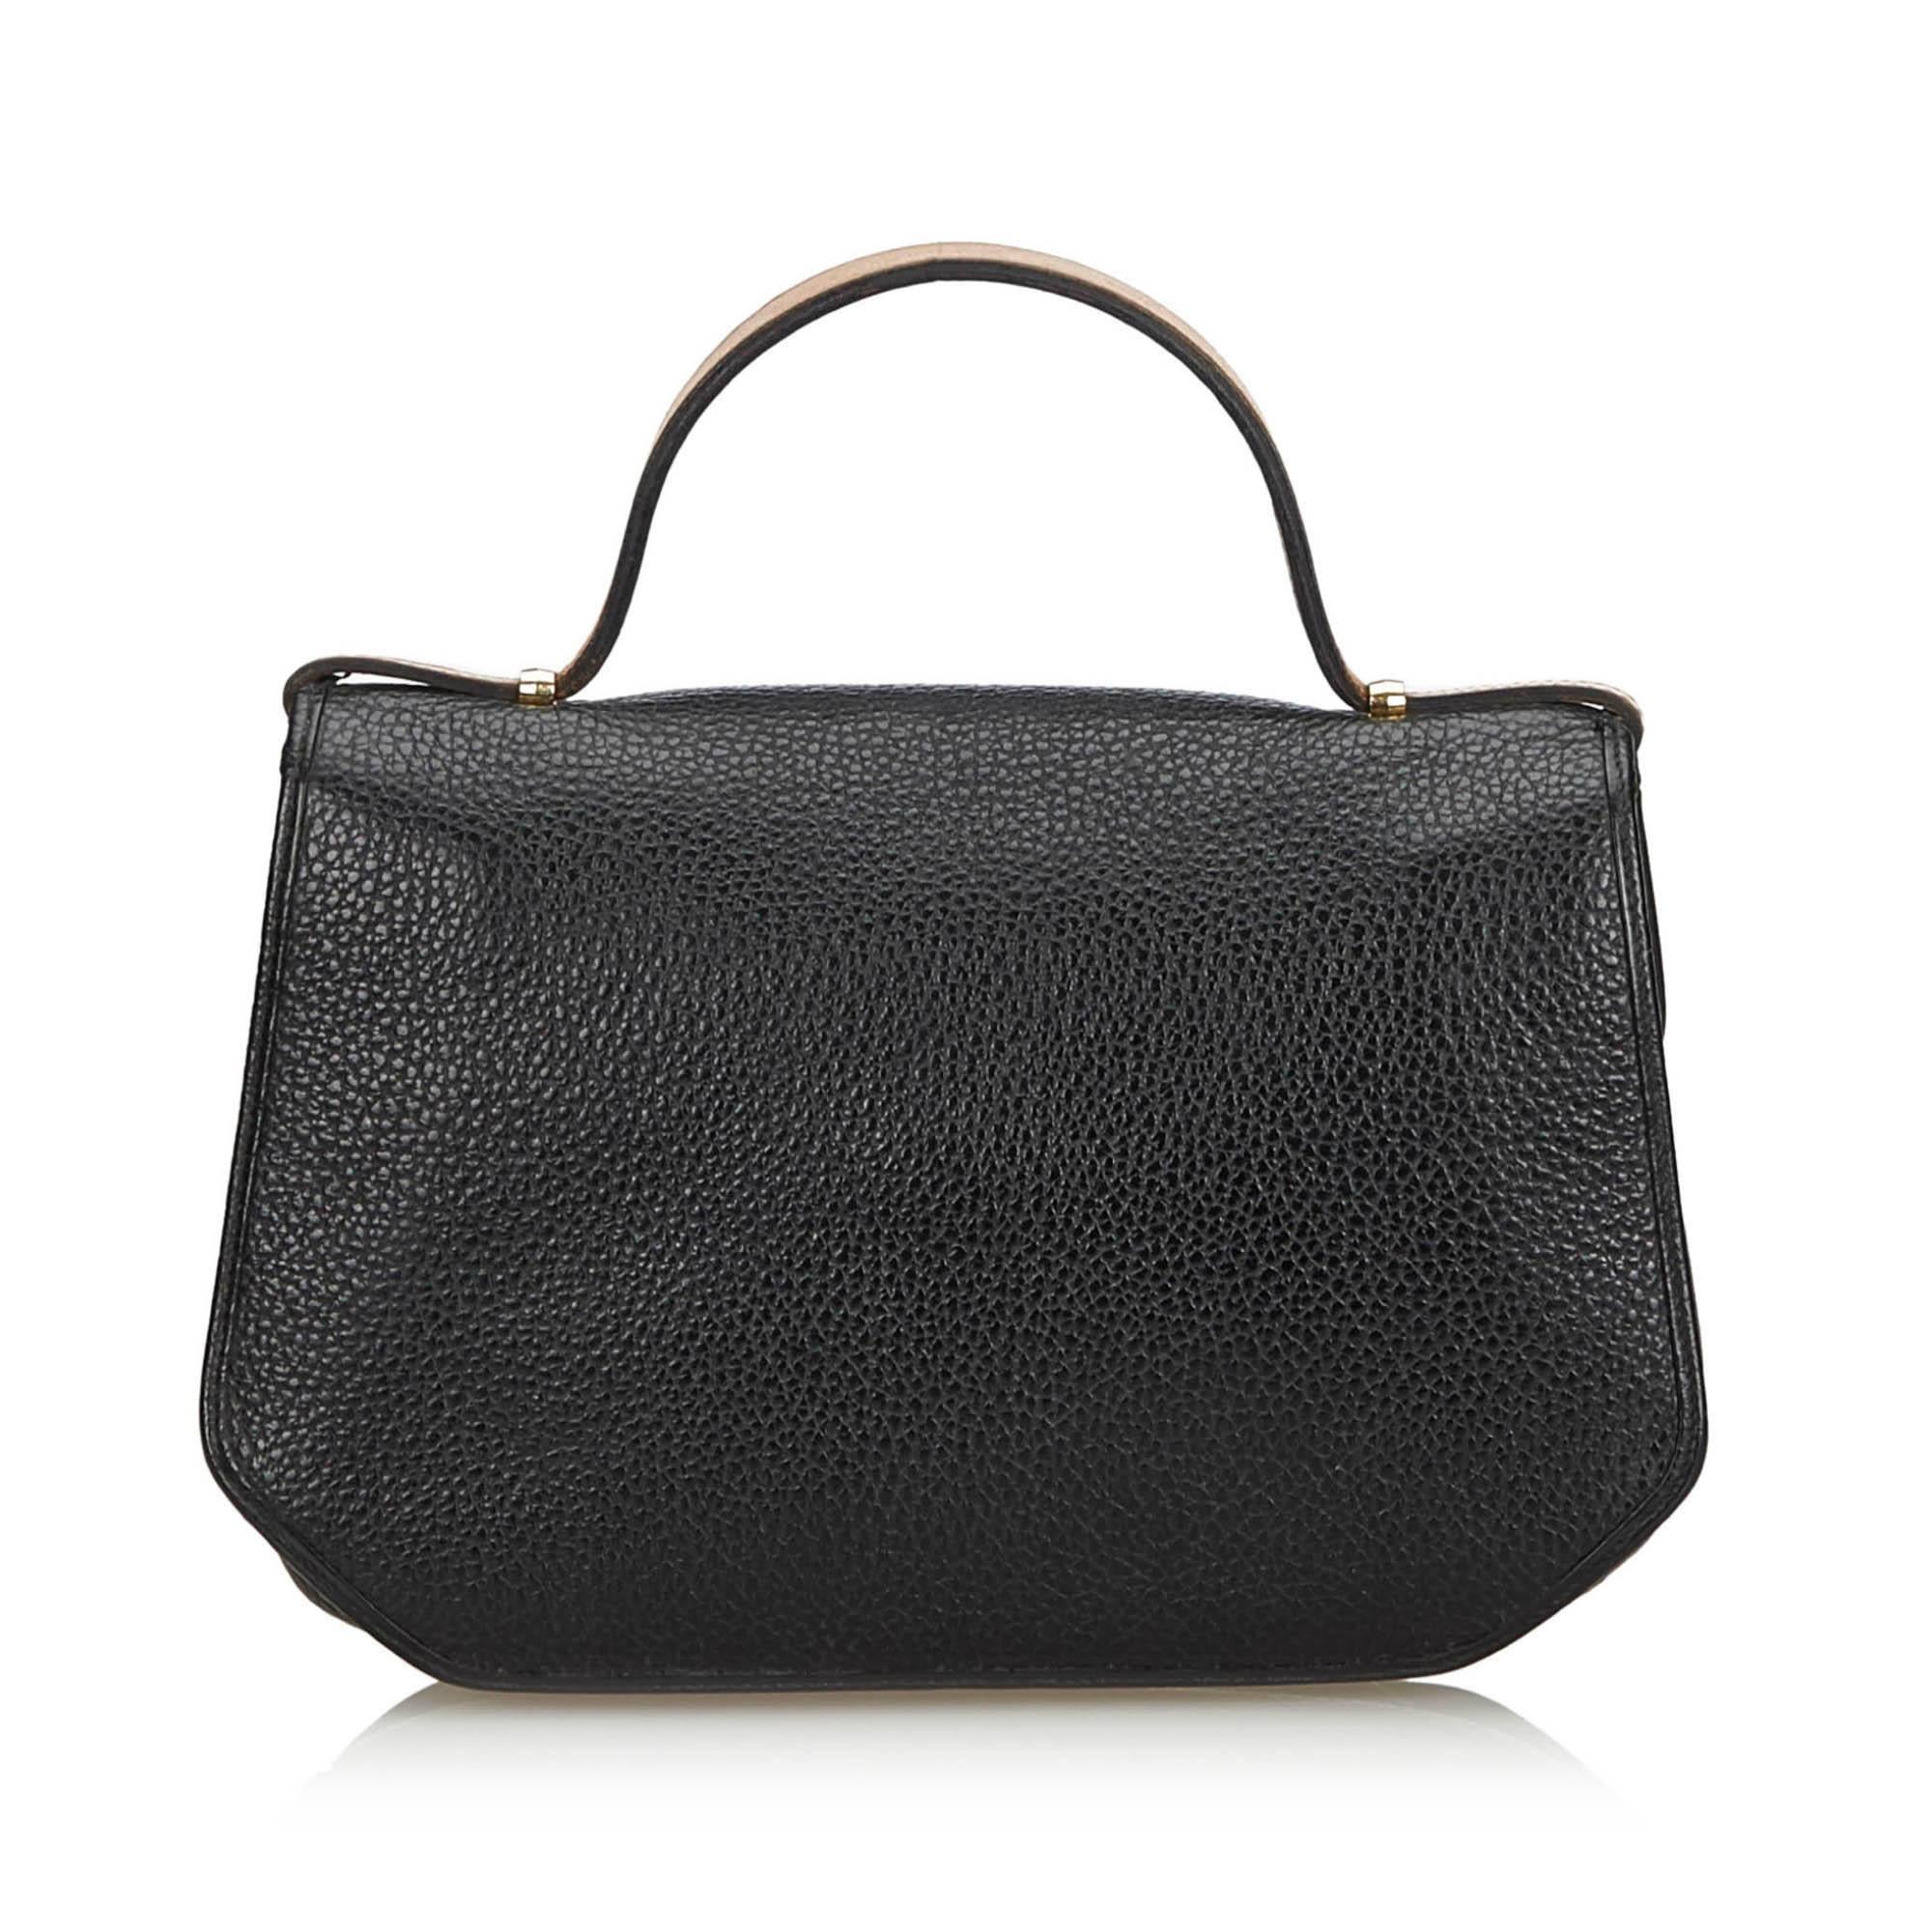 authentic dior handbags